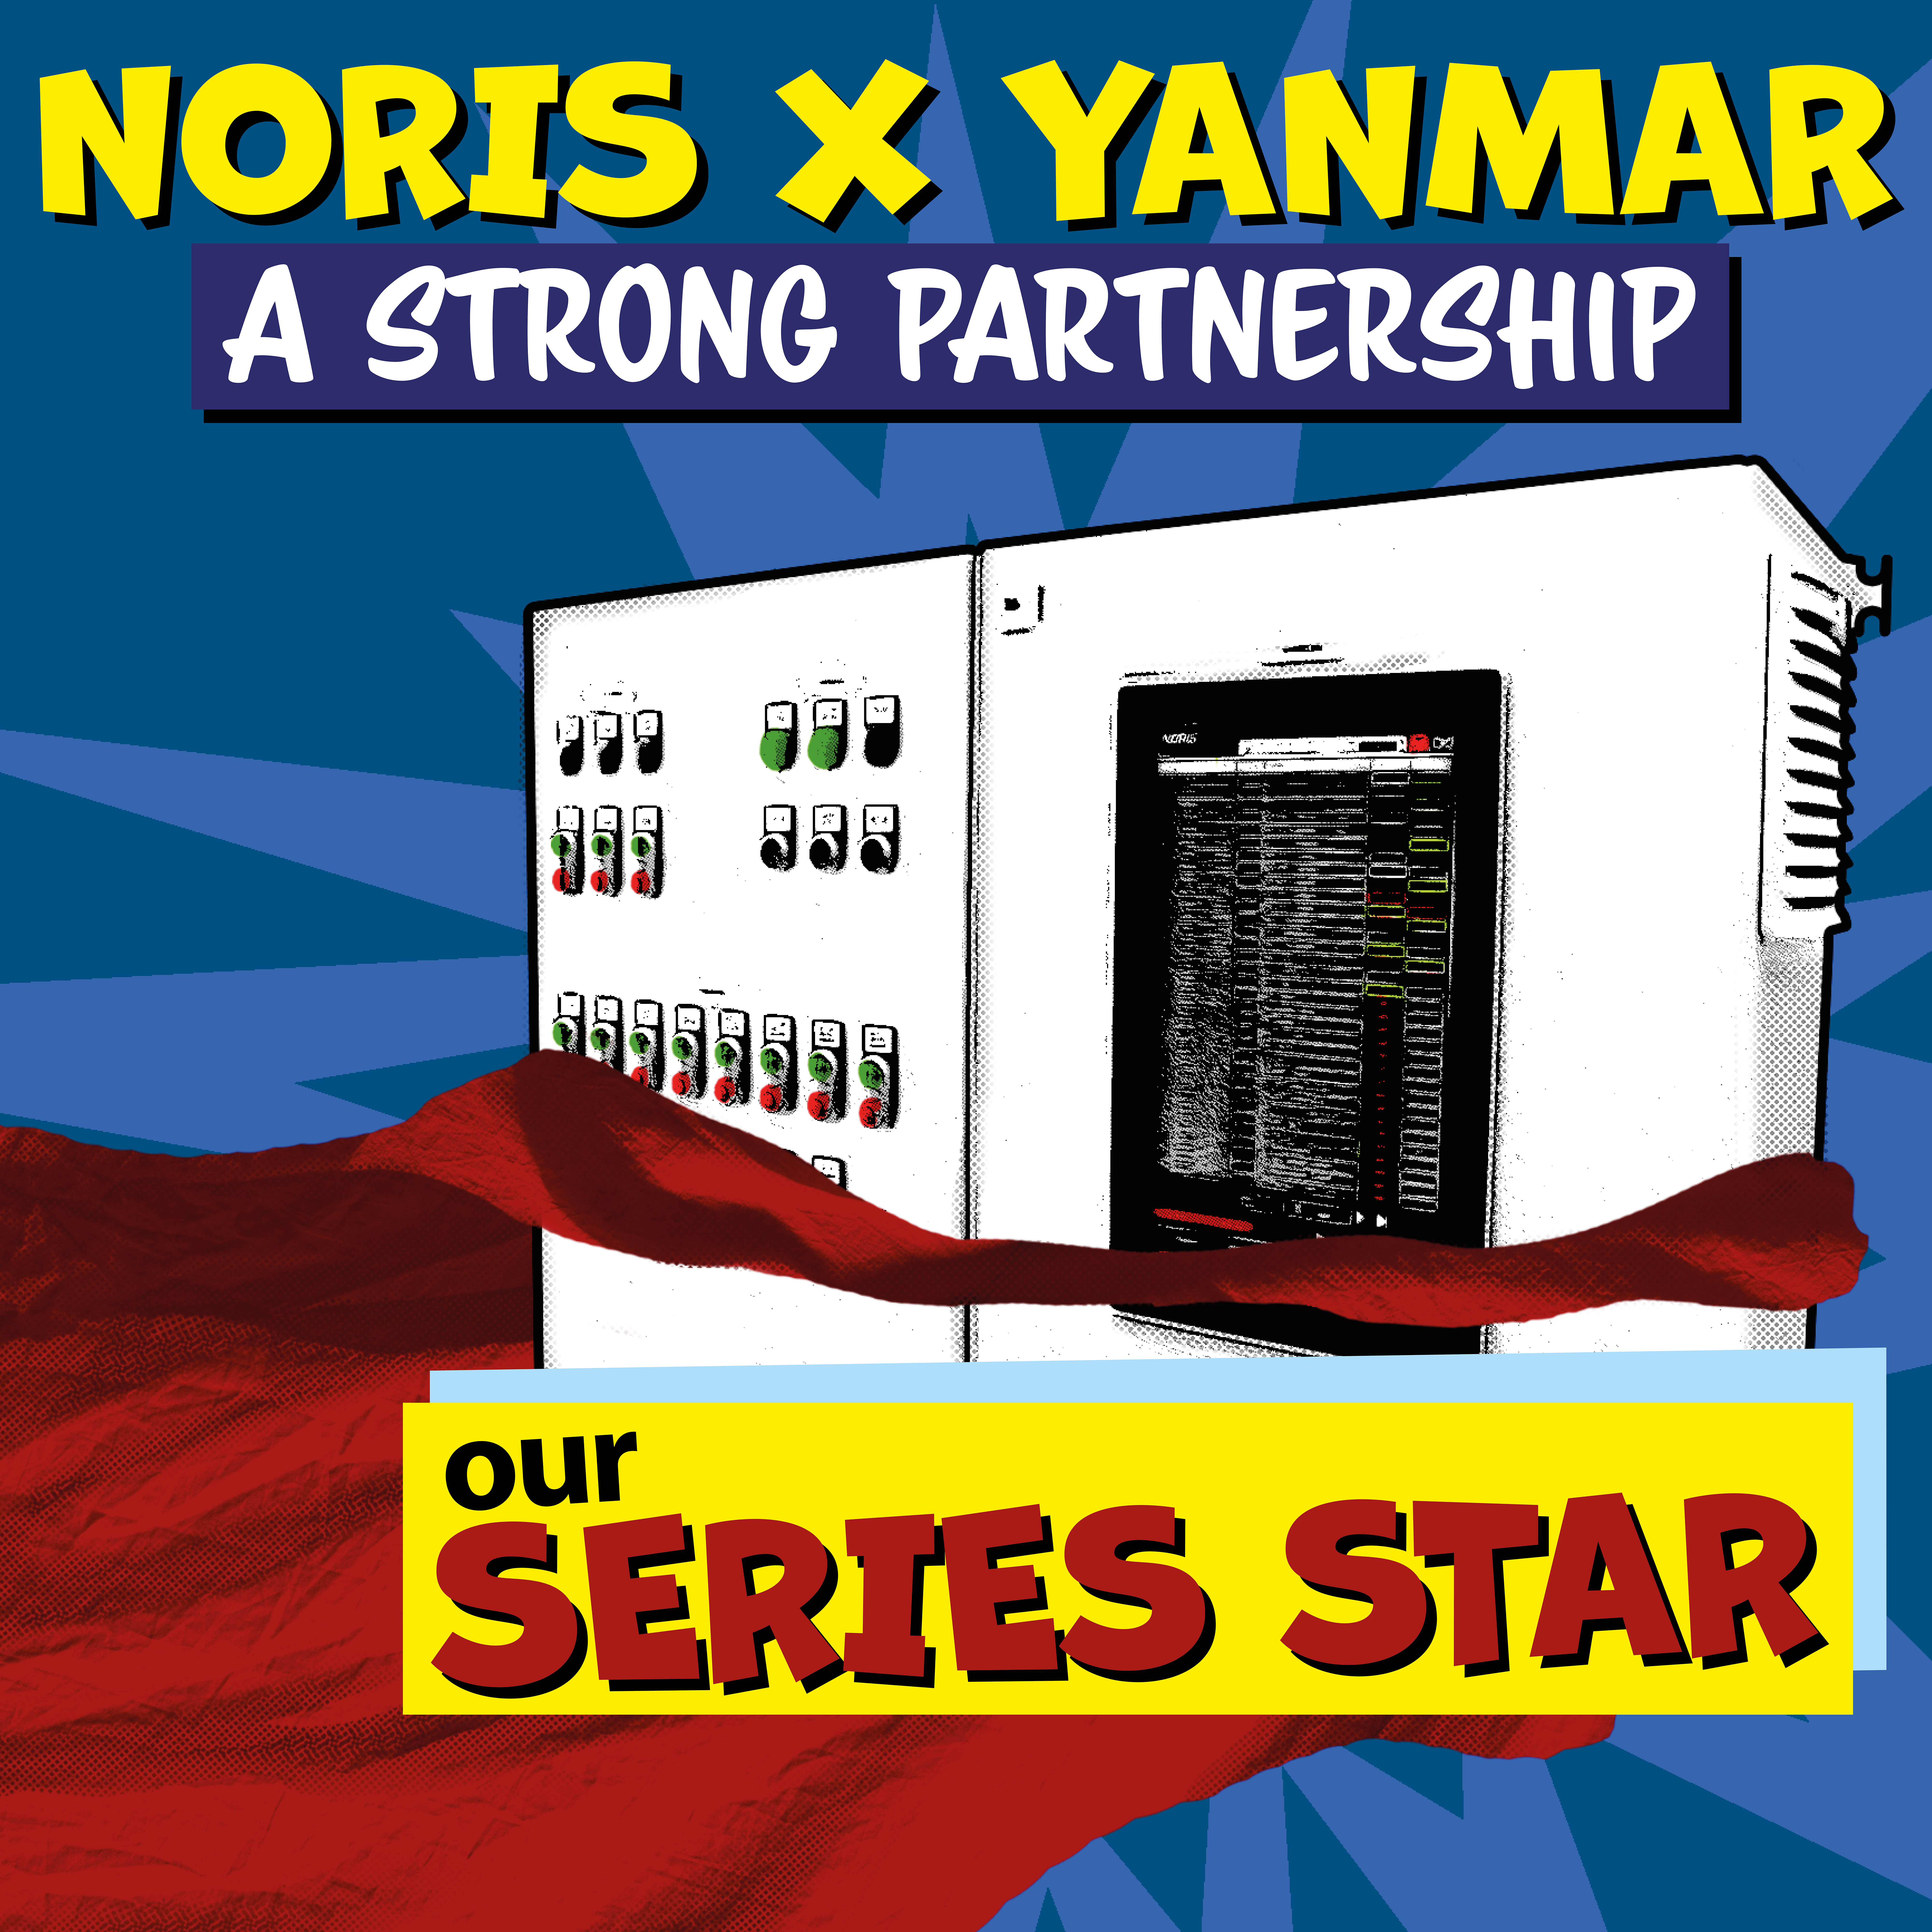 NORIS x YANMAR - A strong Partnership